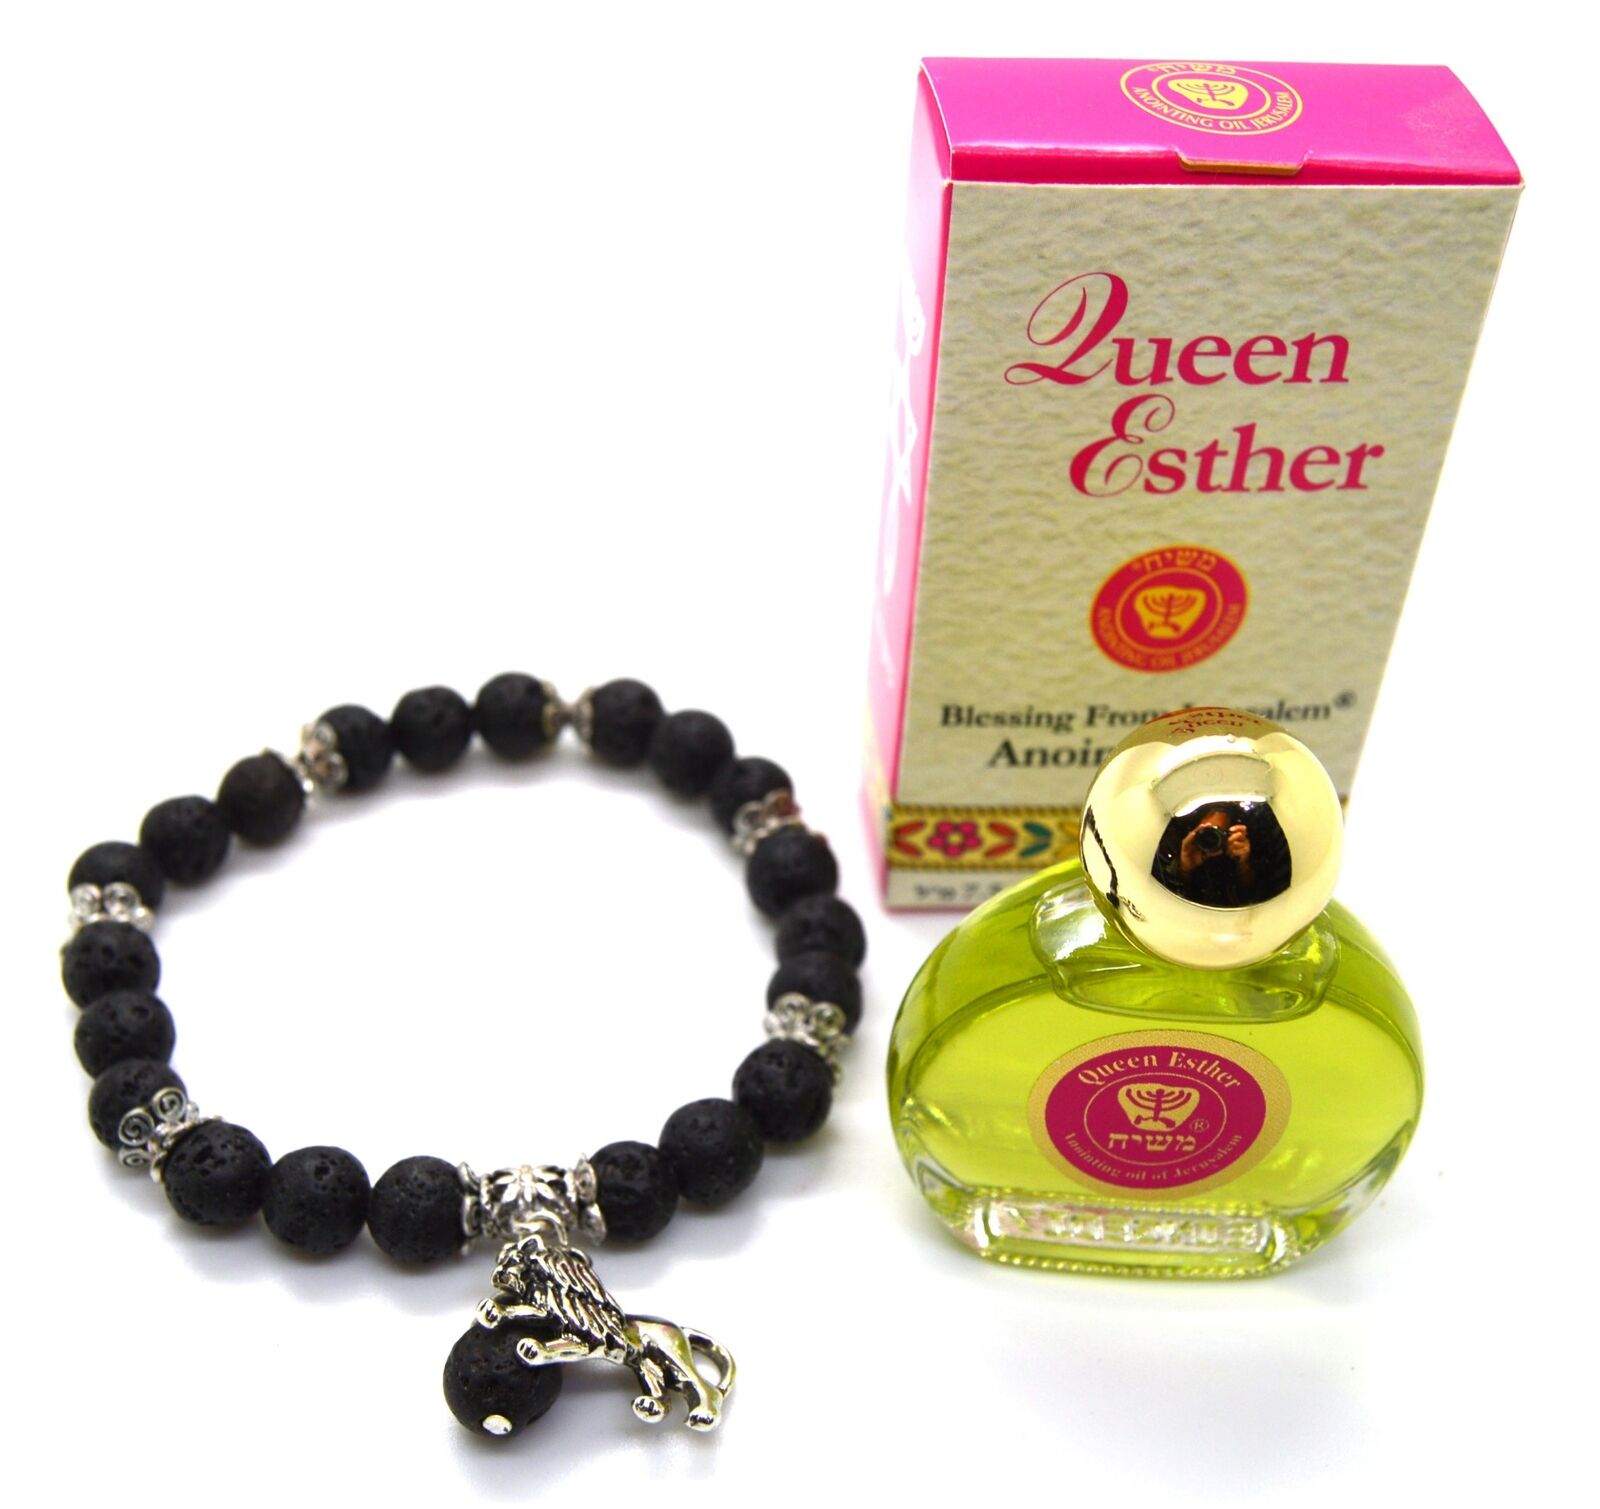 Lion of Judah Lava Bead Bracelet with Blessing from Jerusalem Queen Esther Oil